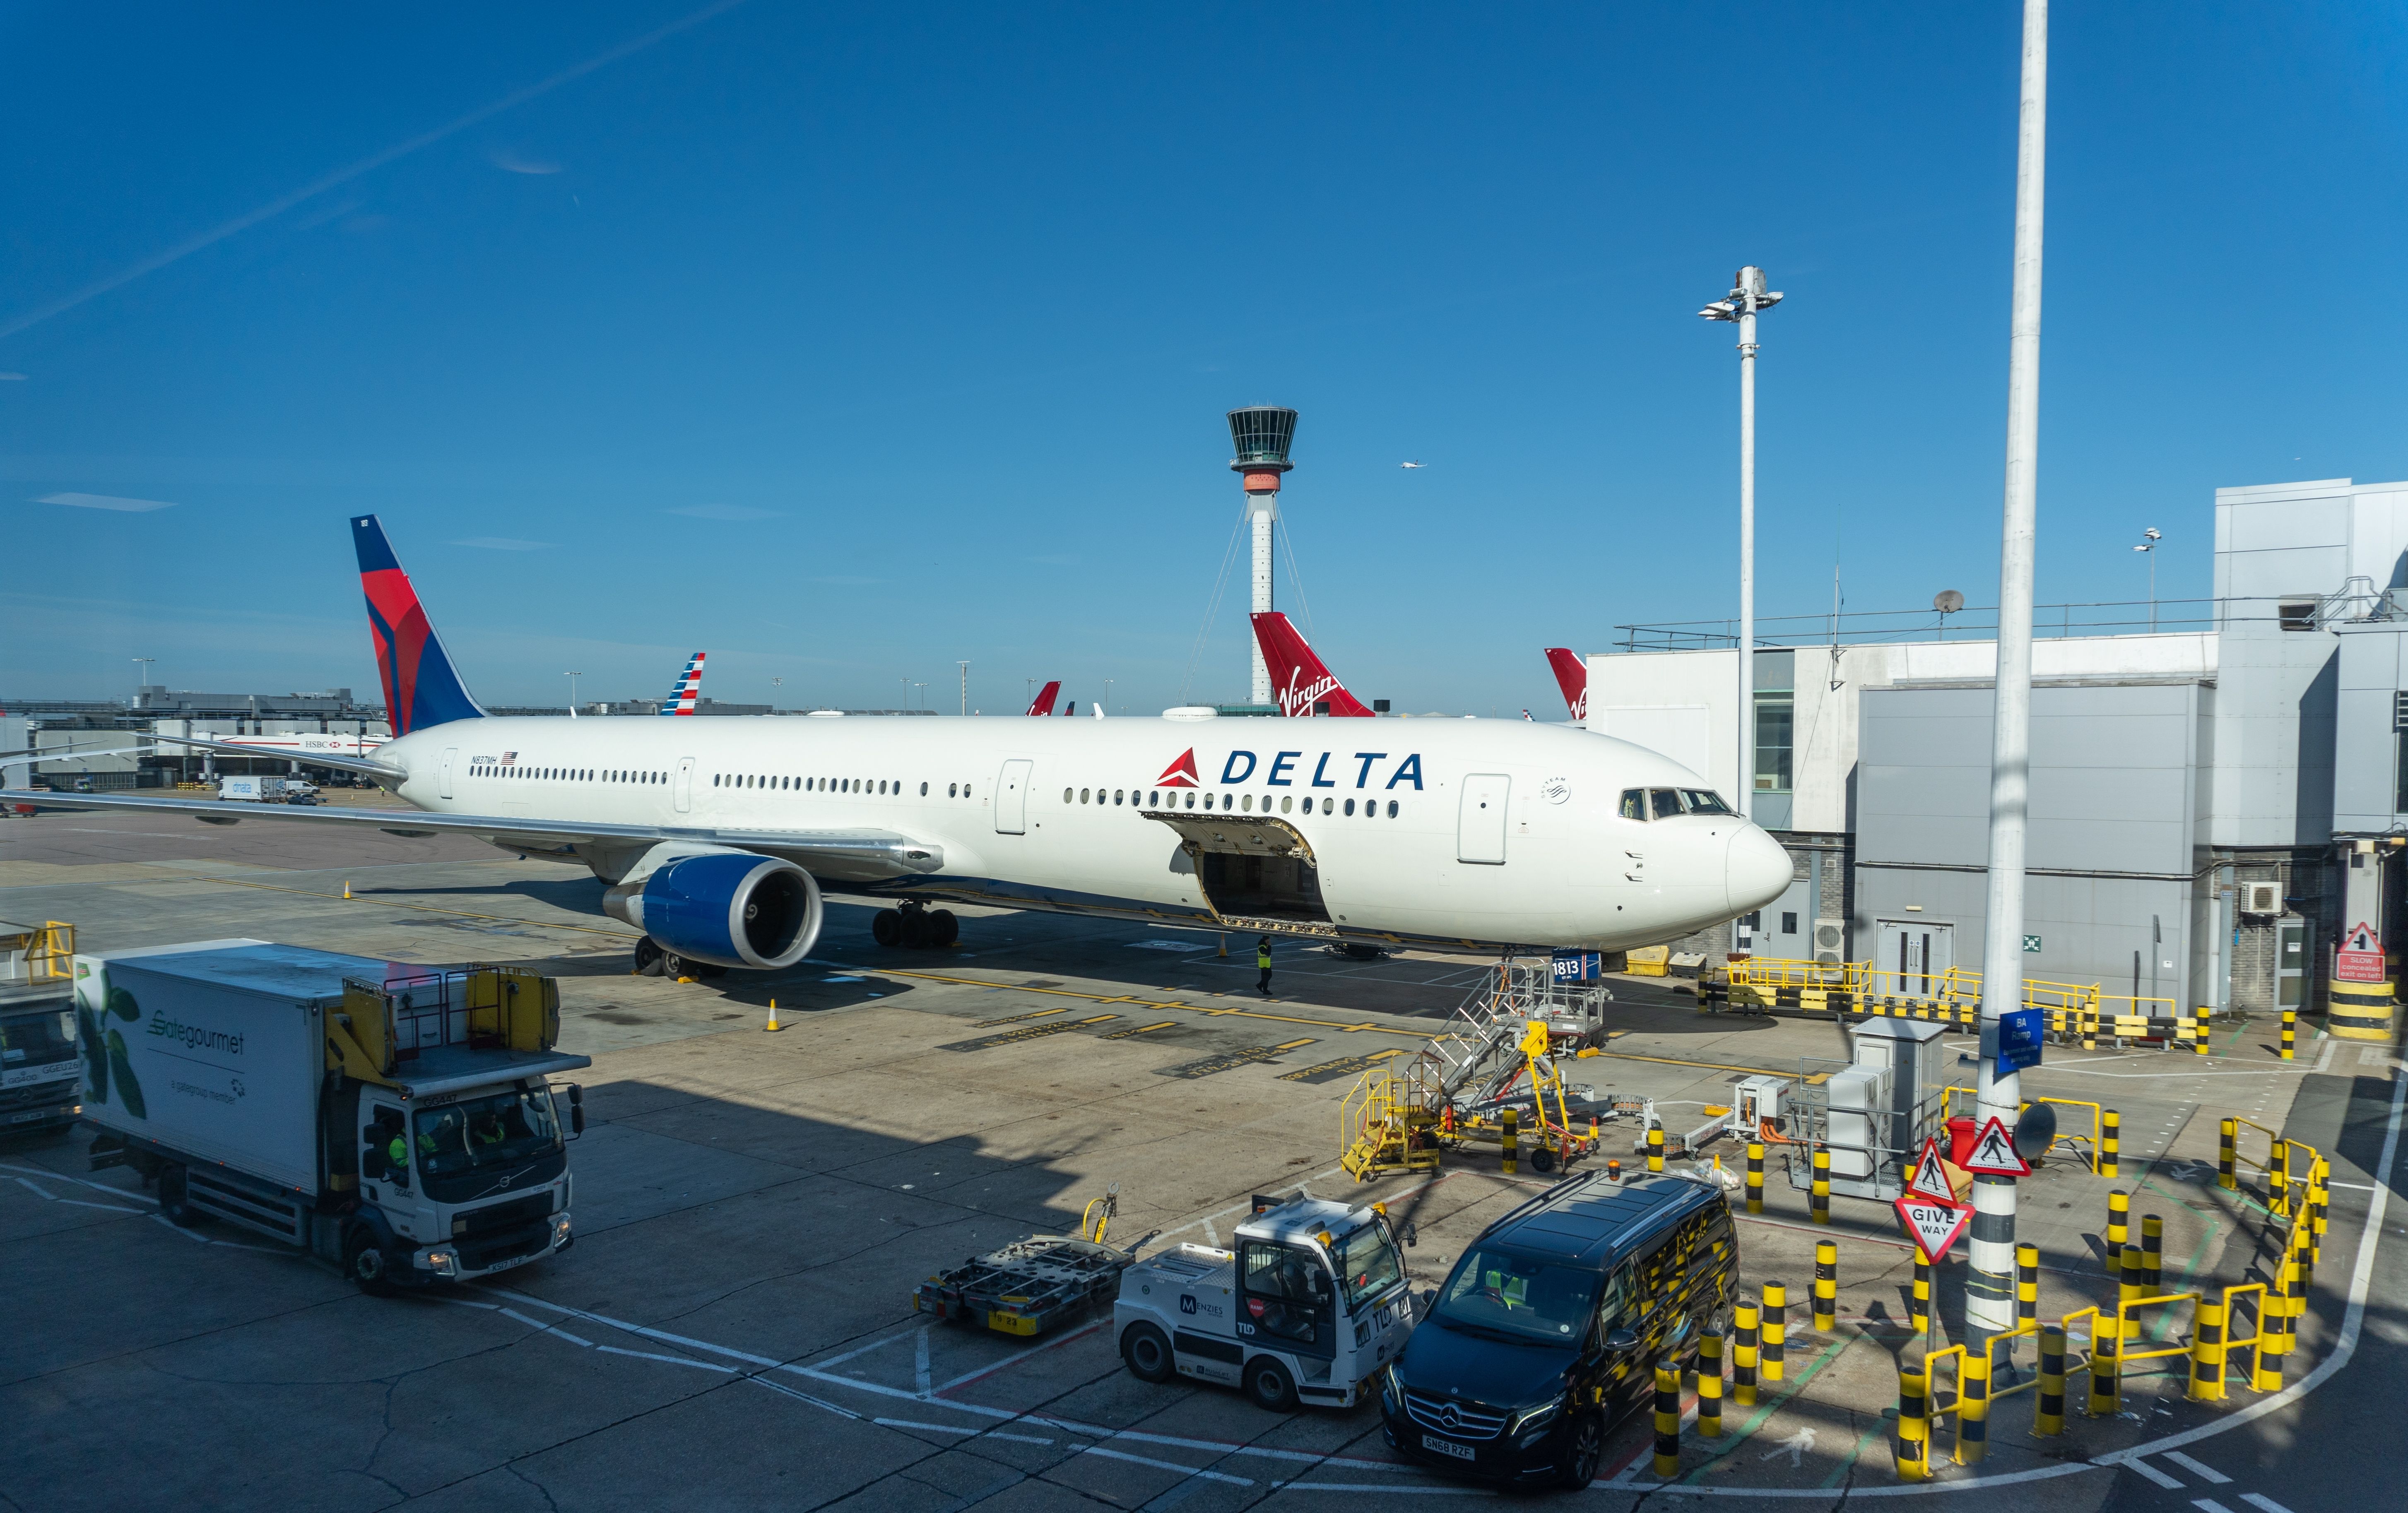 Delta Air Lines Boeing 767 & Heathrow ATC Tower